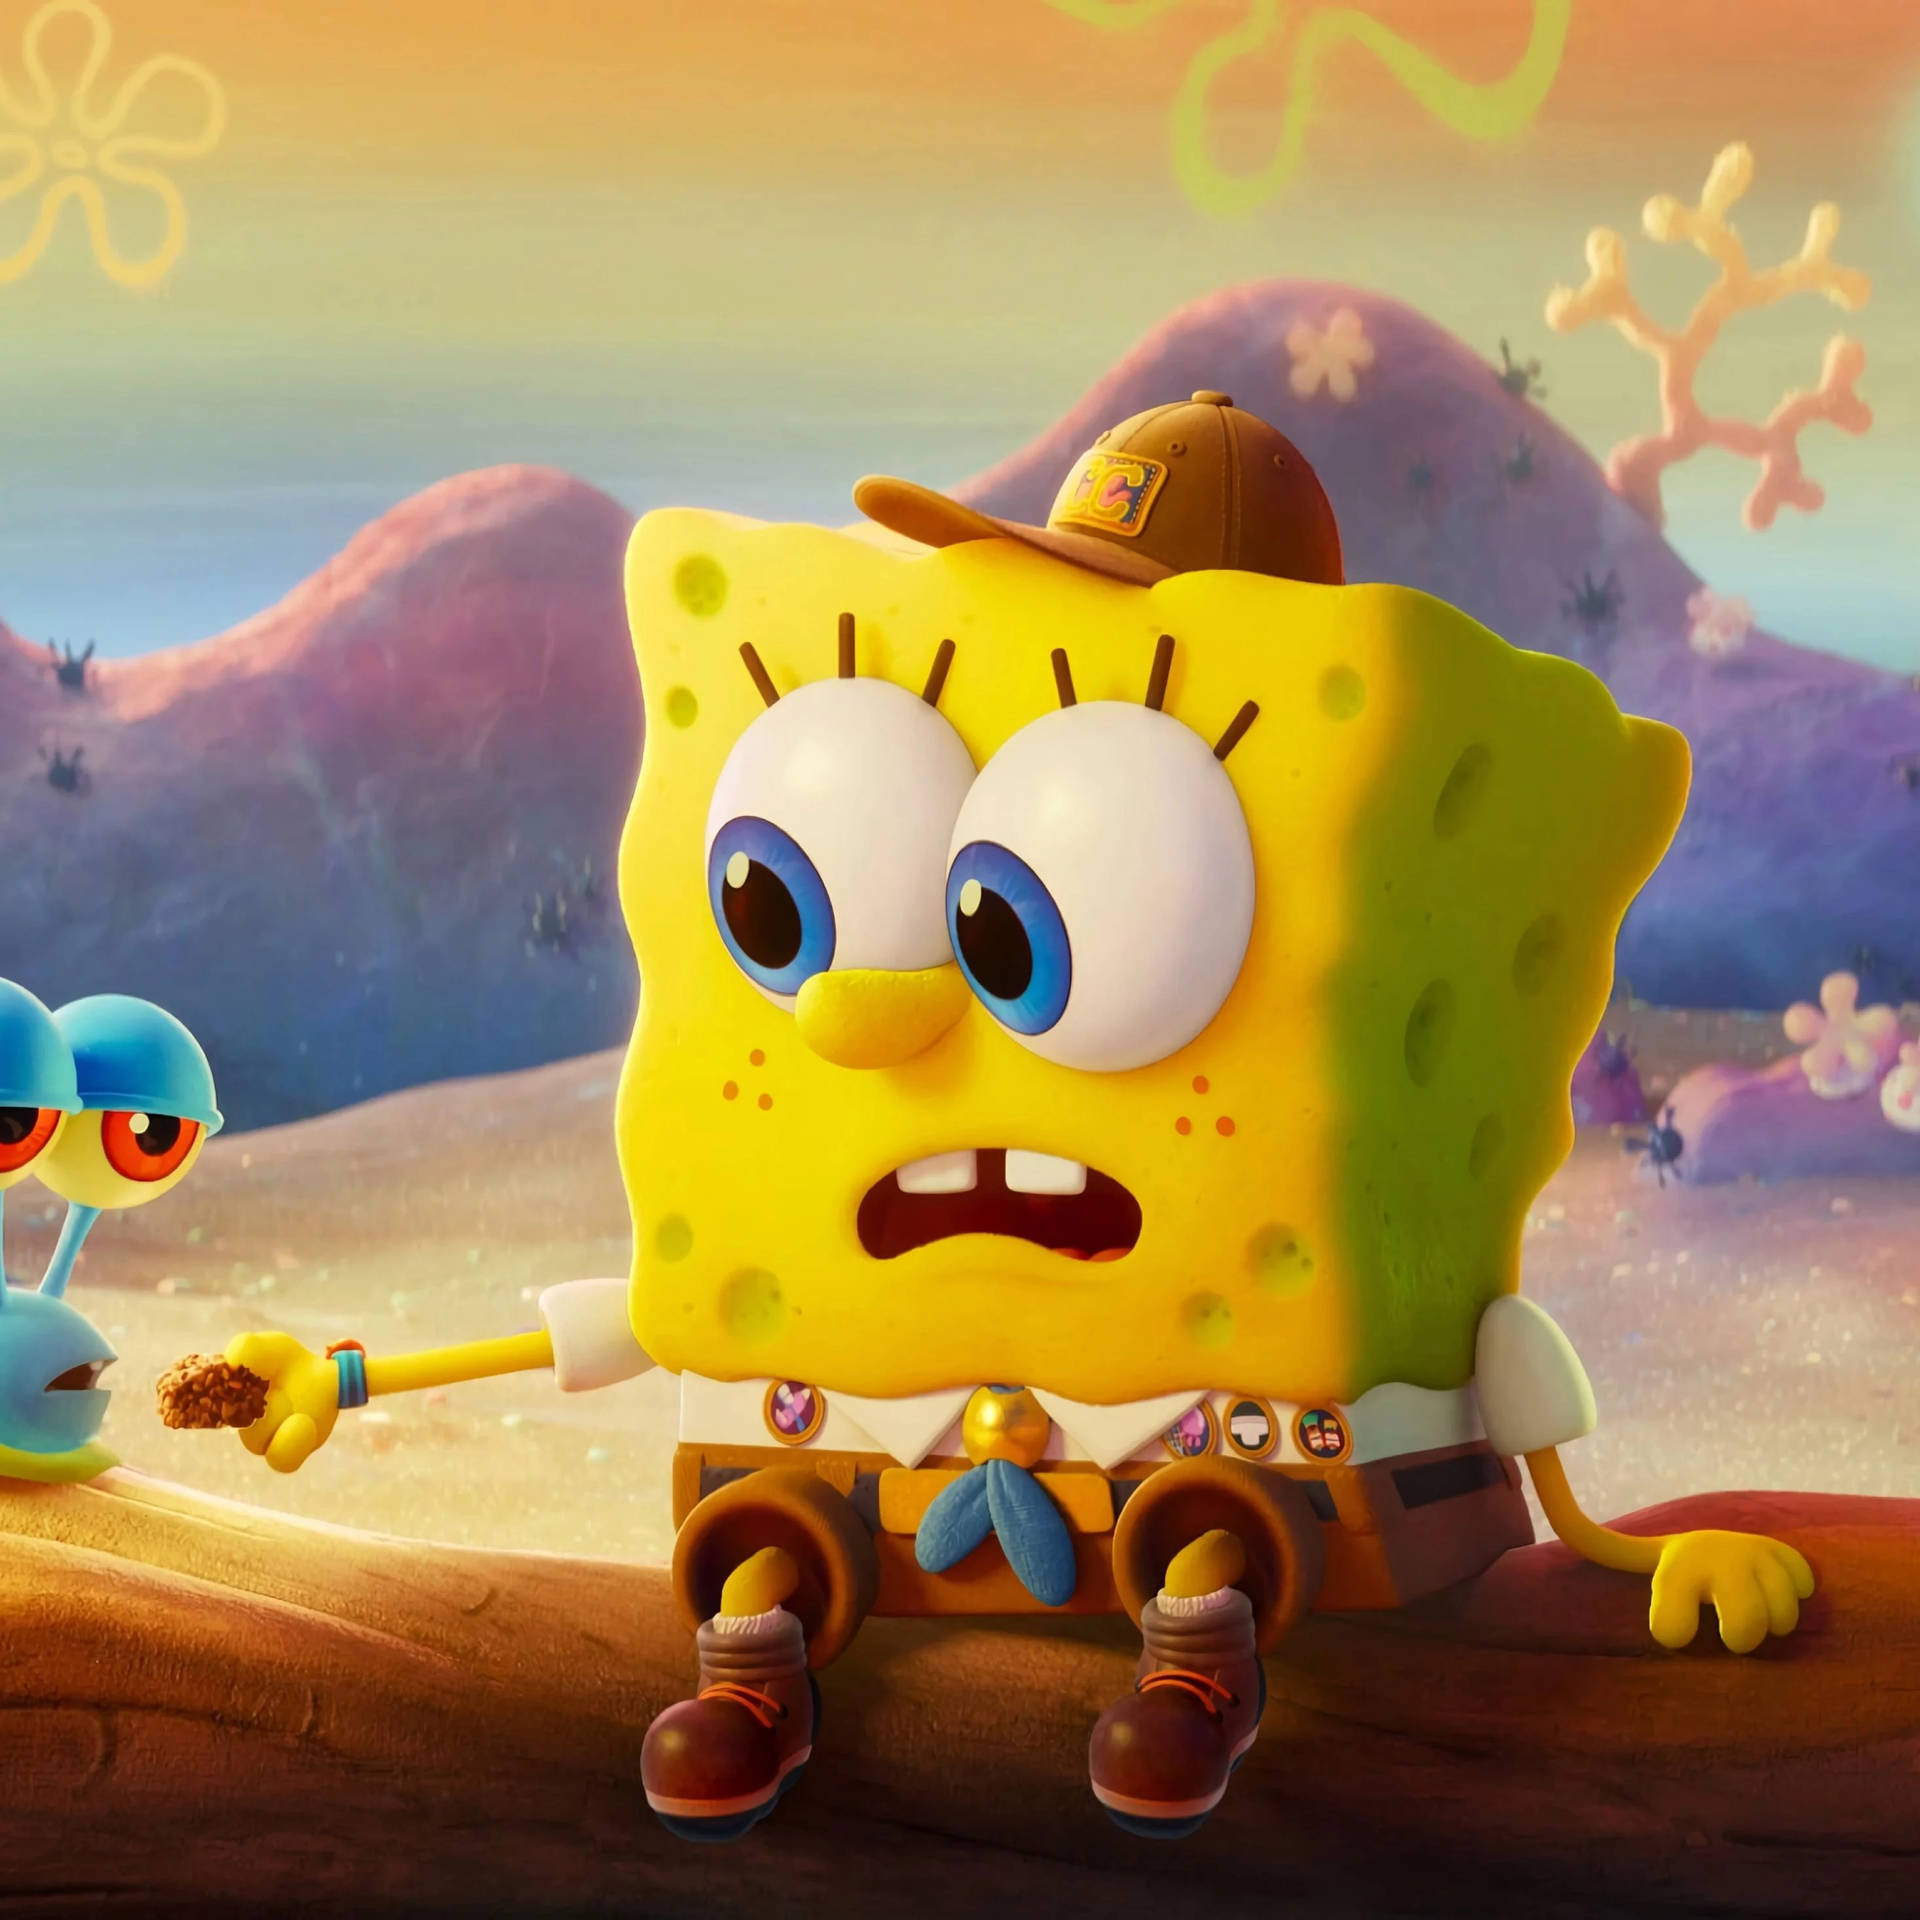 Spongebob 2932X2932 Wallpaper and Background Image